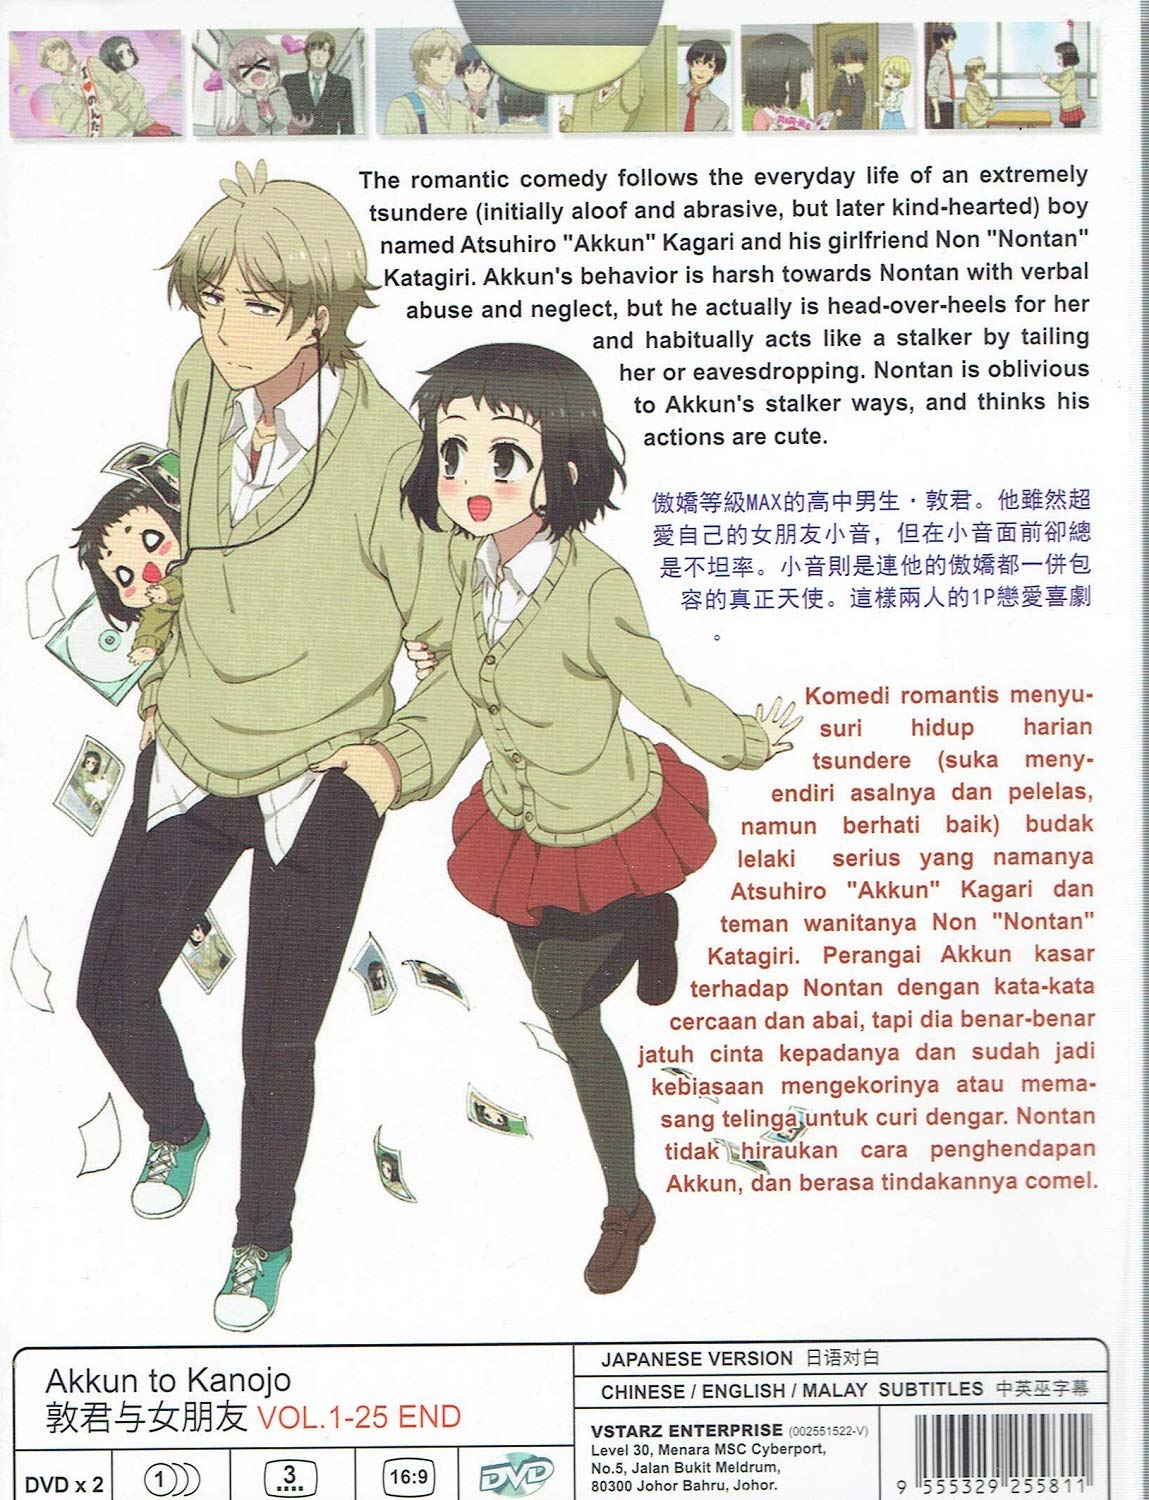 Wallpaper Kata2 Romantis Cartoon Anime Illustration Fictional